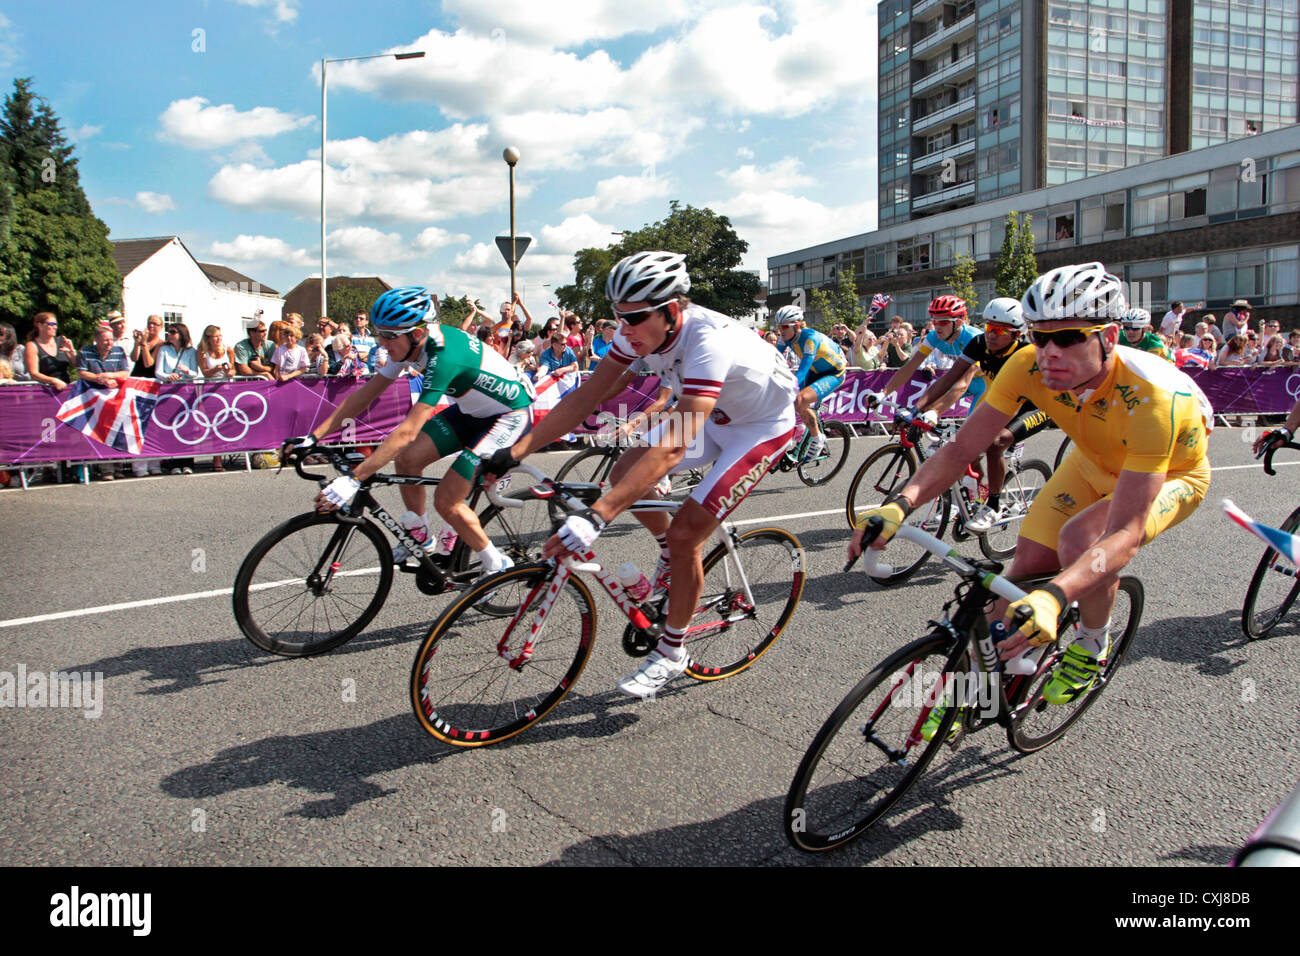 2012 London Olympics men's cycling road race Stock Photo